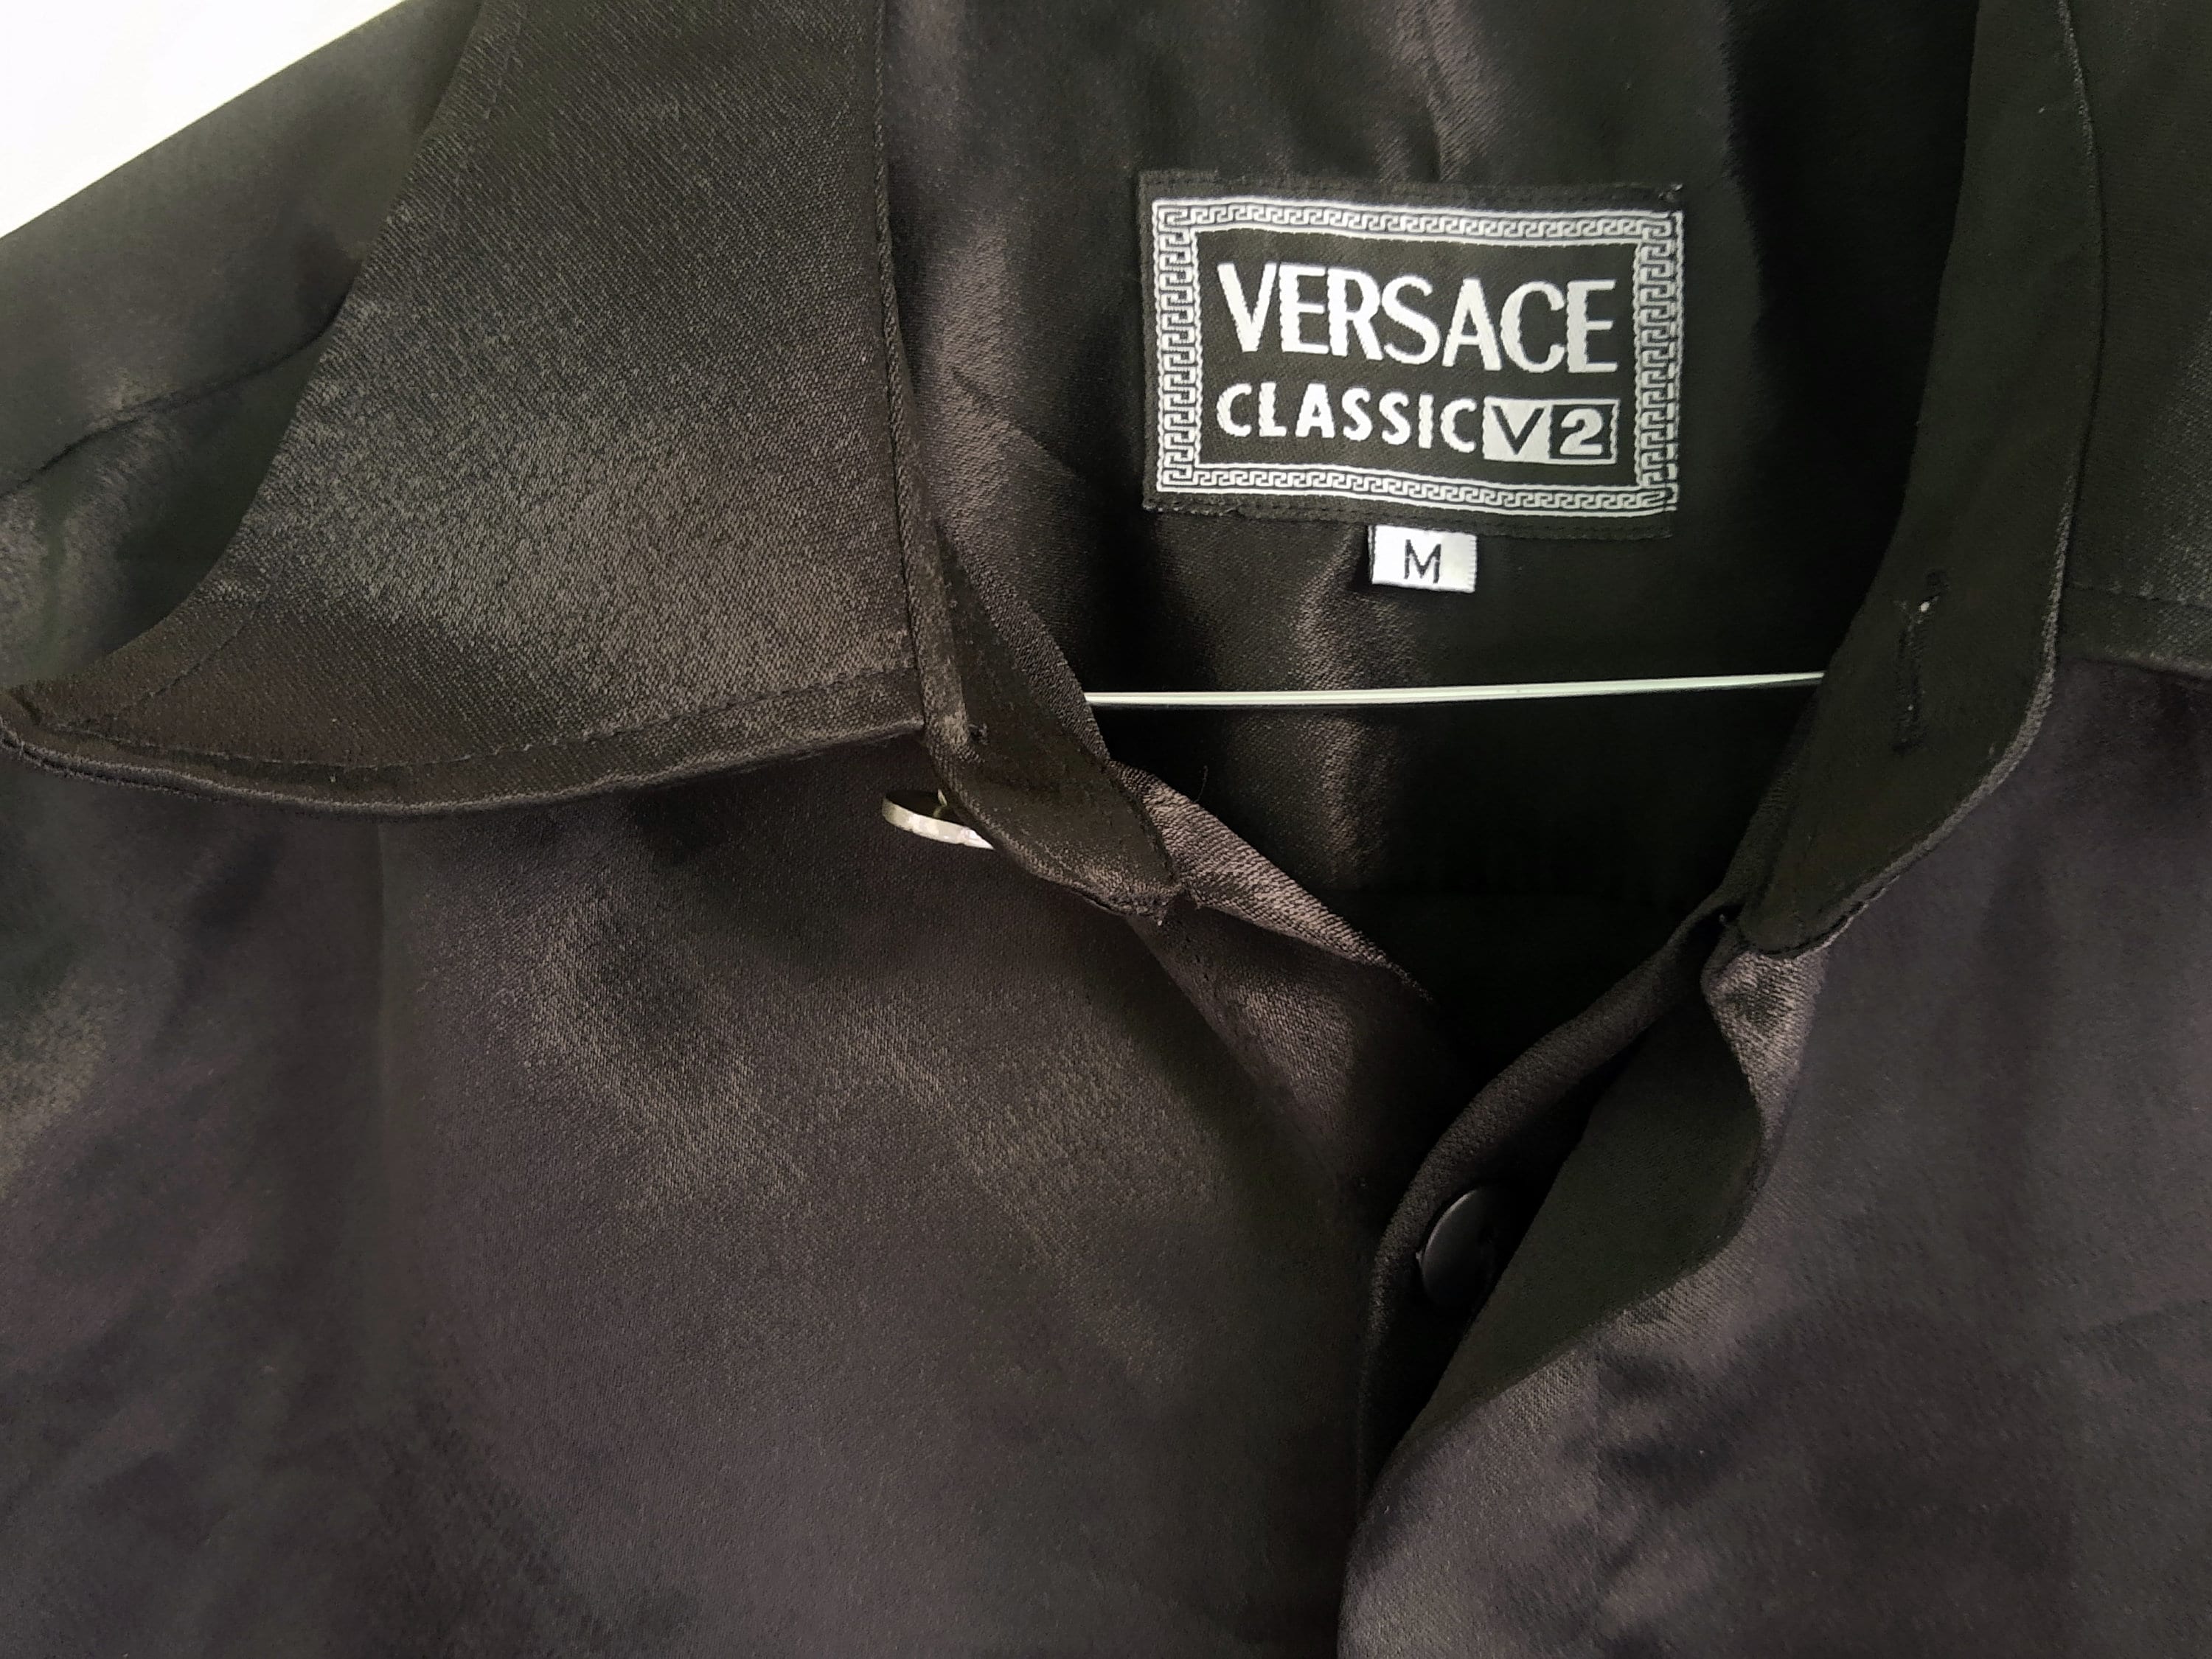 Versace Classic V2 Vintage Shiny Black Versace Oxford Shirt - Etsy